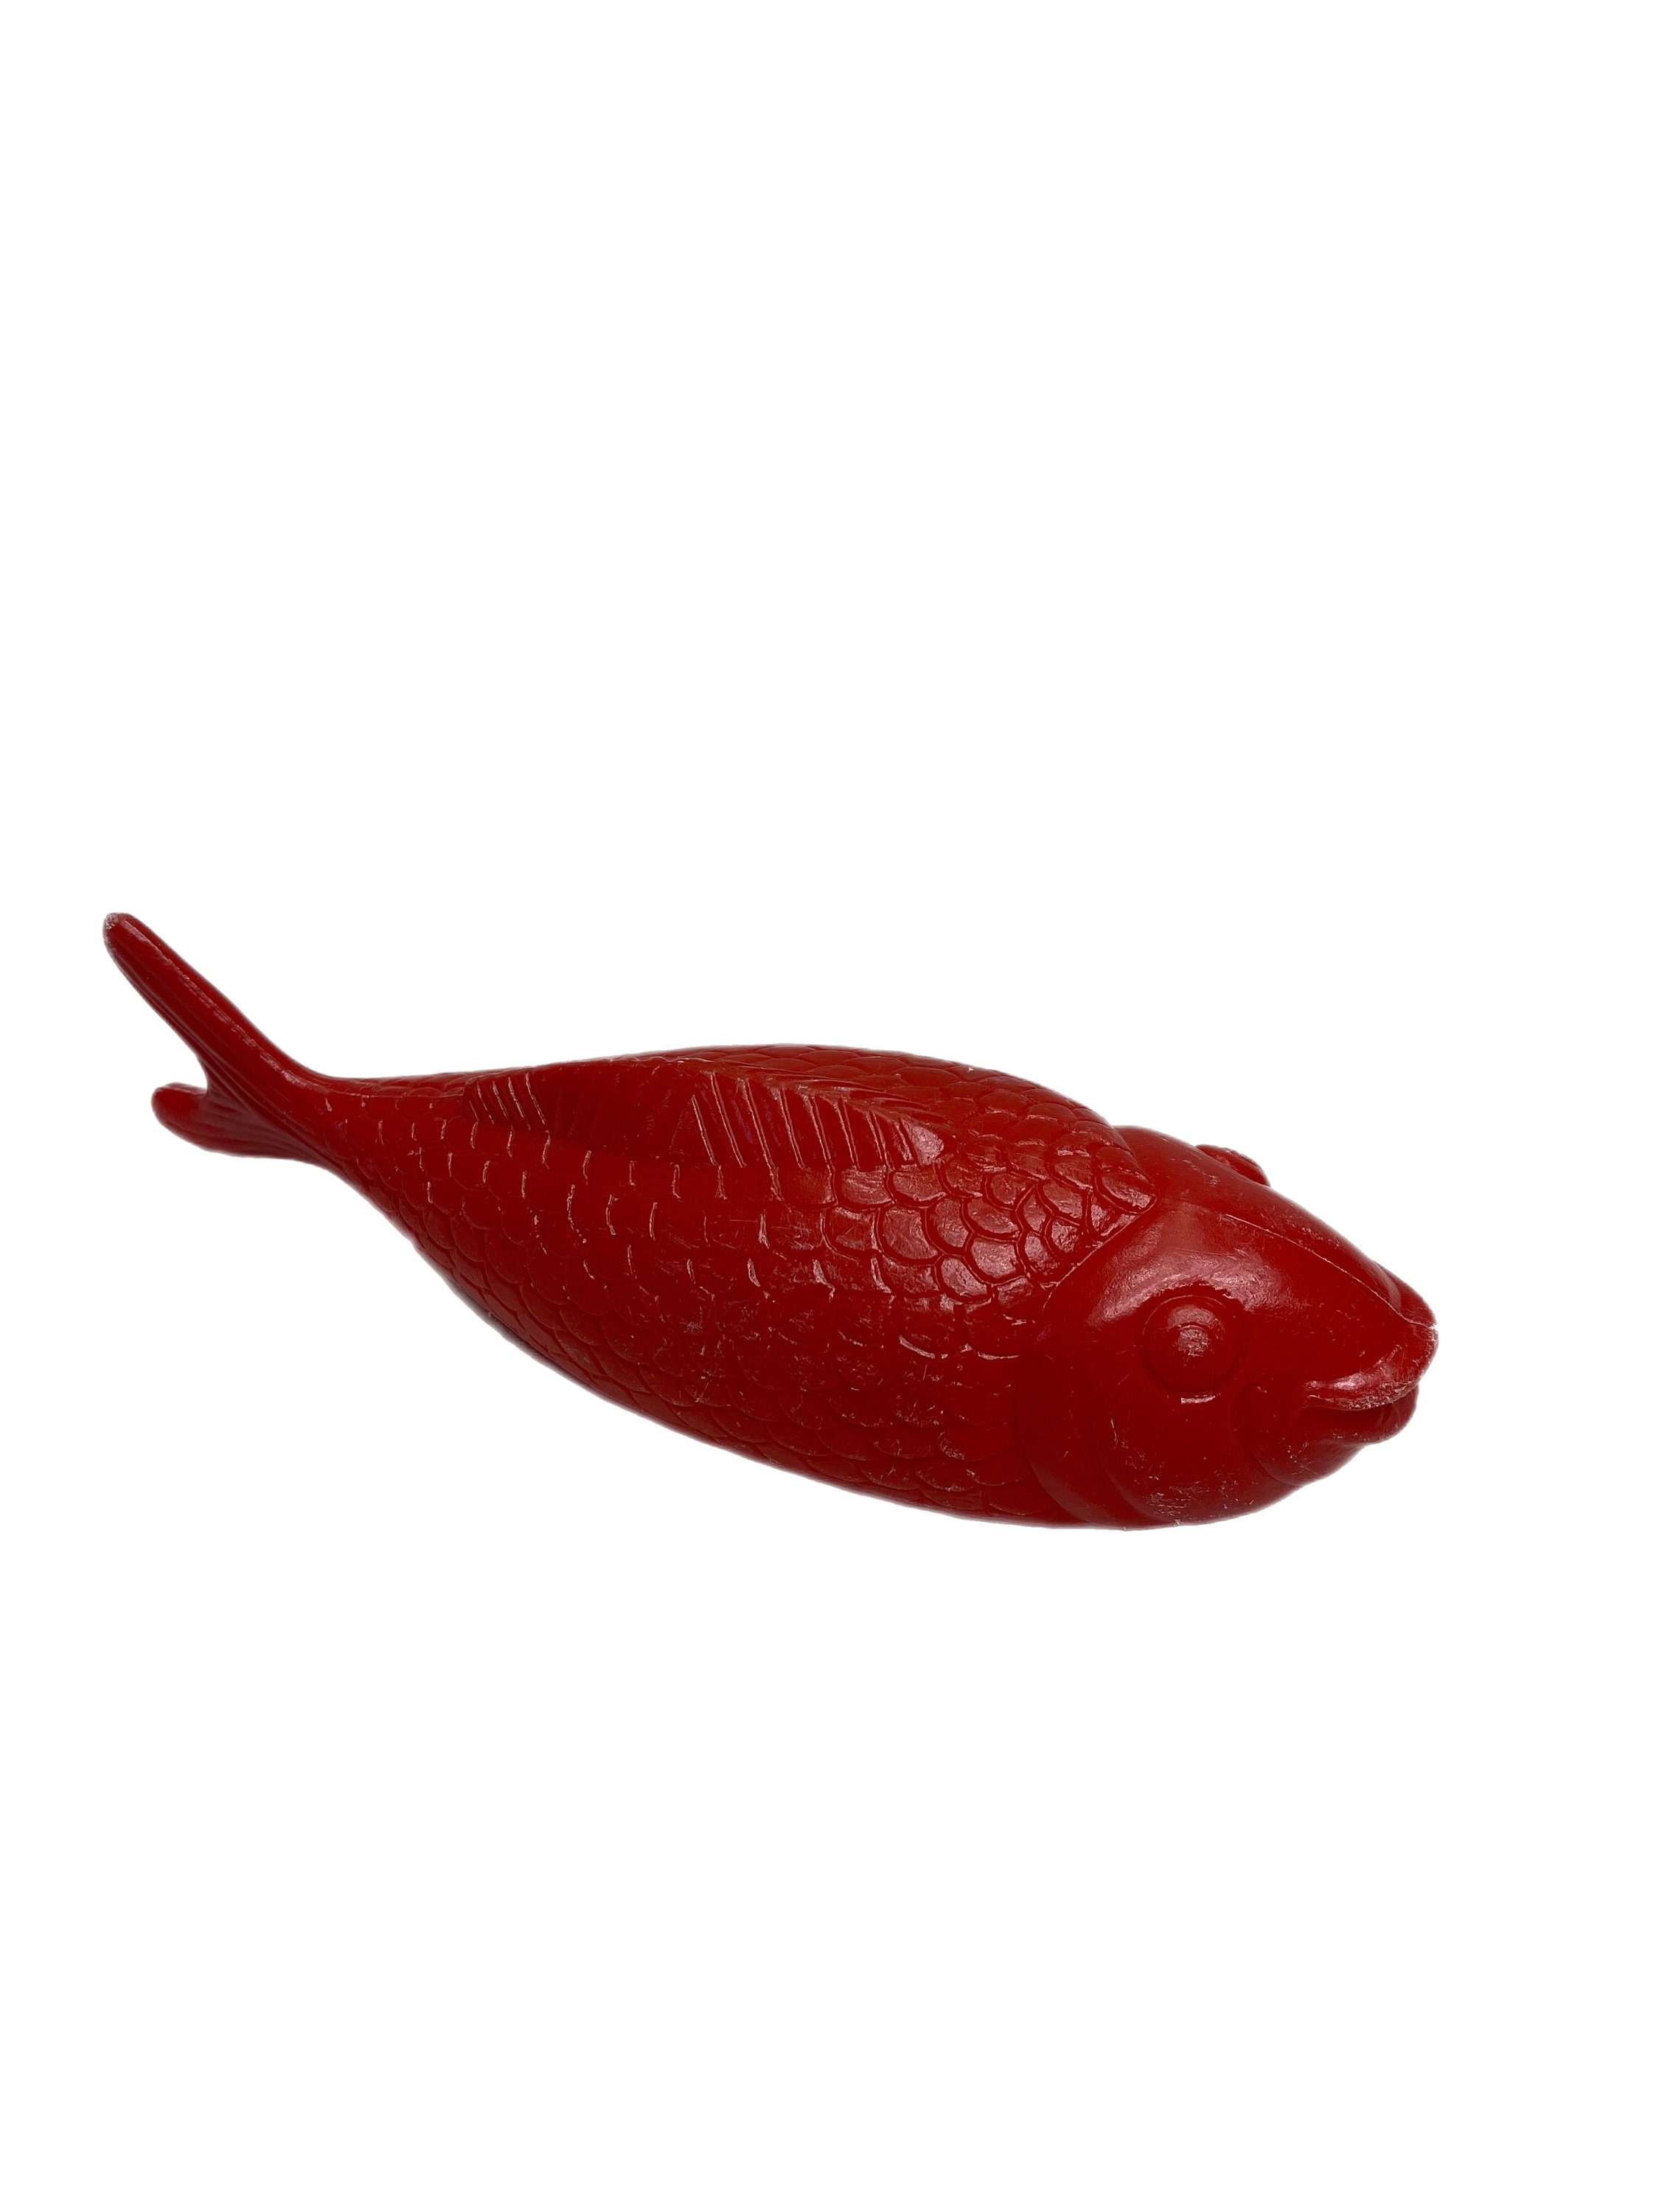 Vintage Fish Toy 